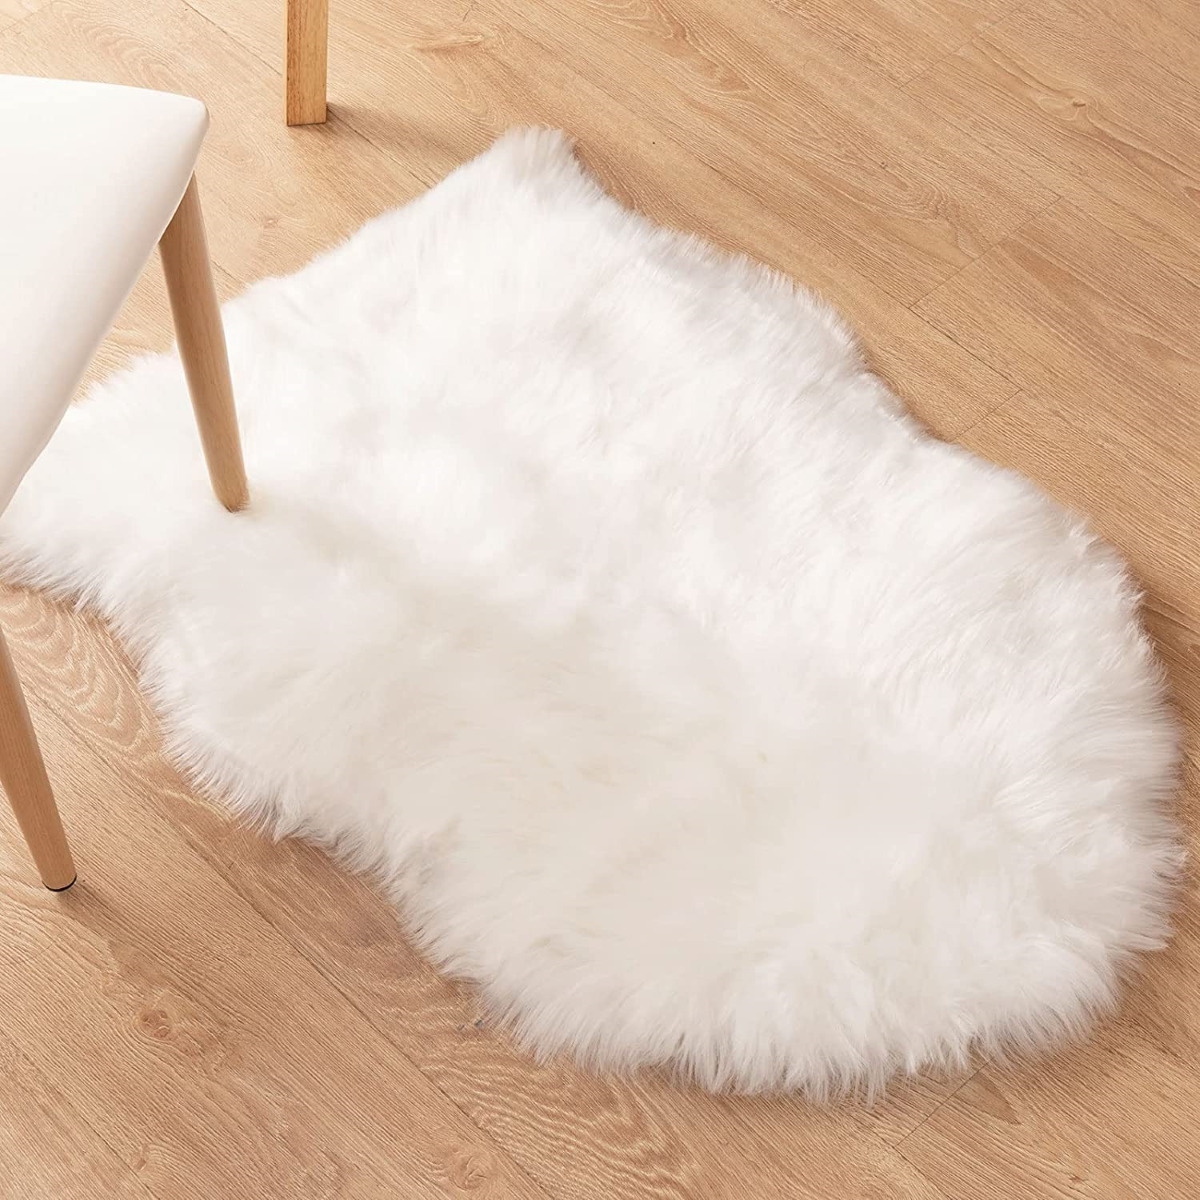 types of rugs - white fluffy rug